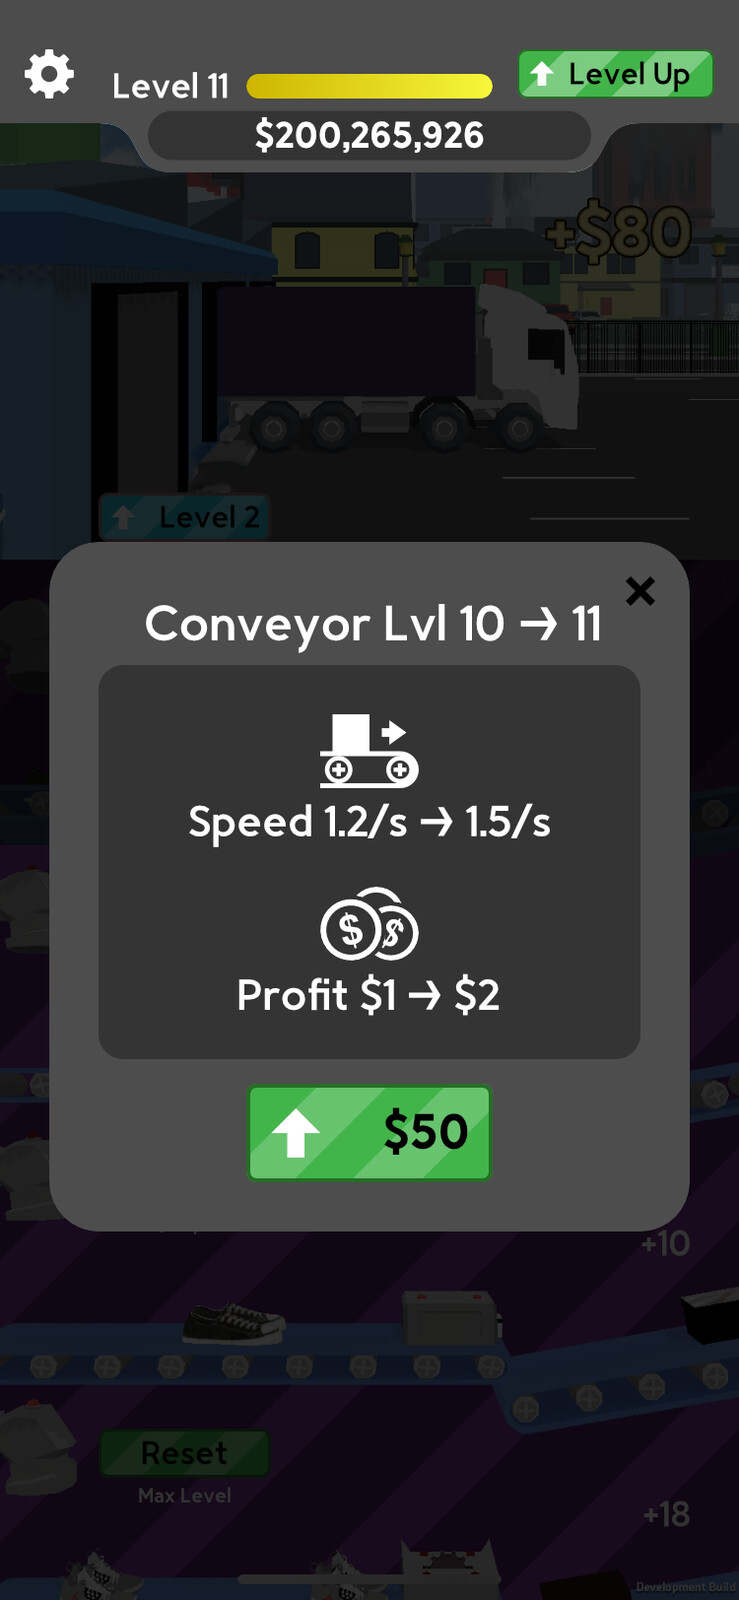 Conveyor upgrade popup window. 

Custom UI and icons made with Affinity Designer.